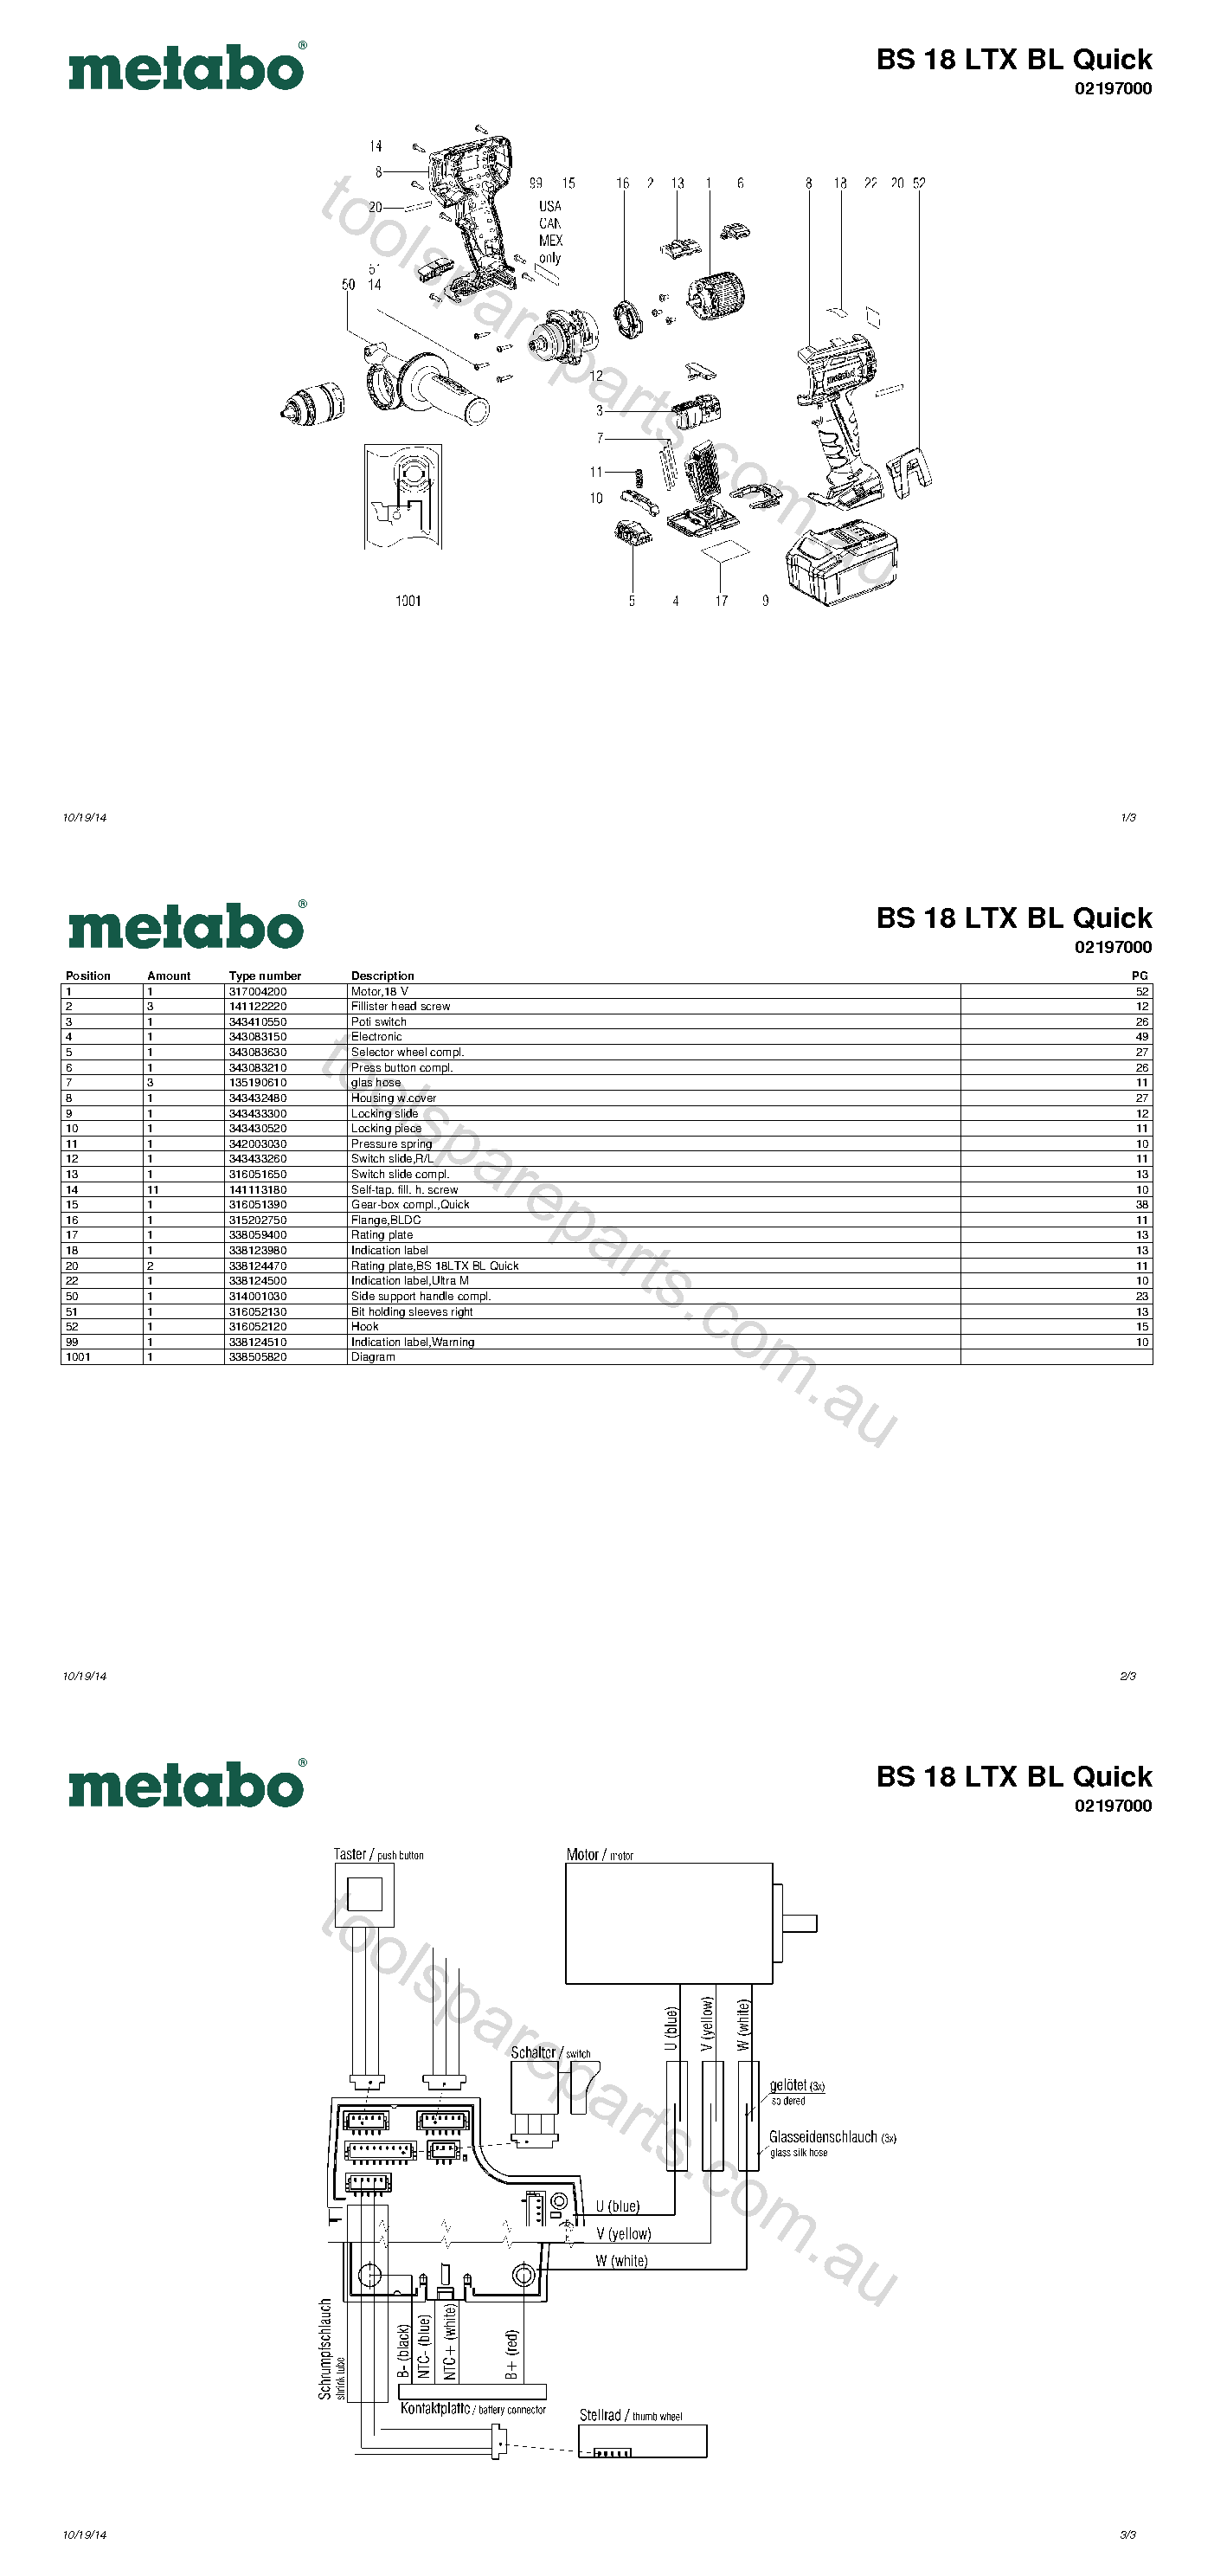 Metabo BS 18 LTX BL Quick 02197000  Diagram 1